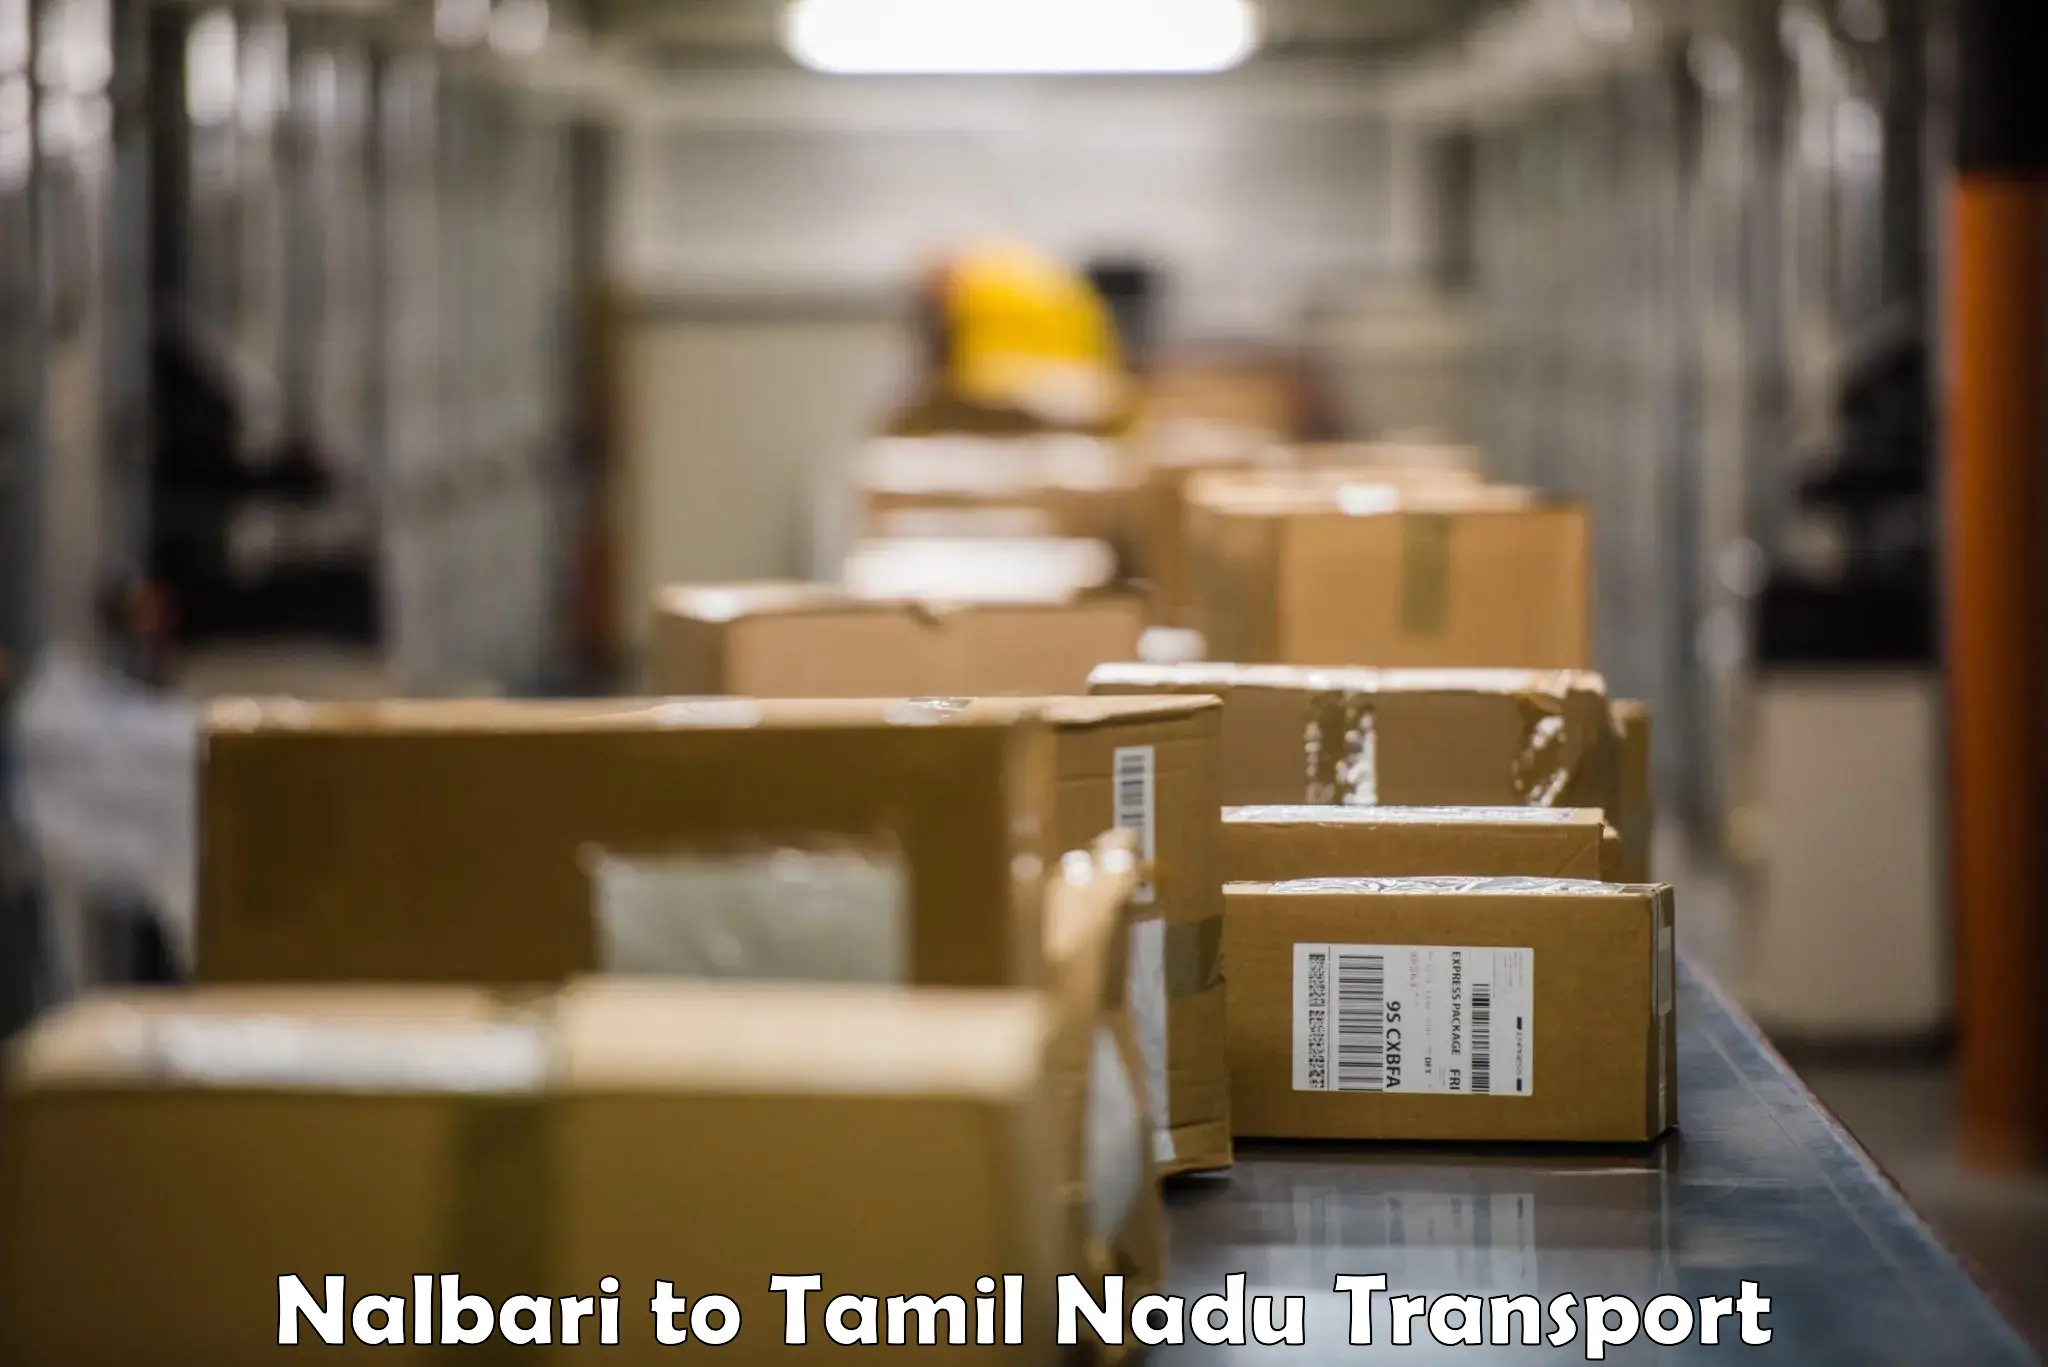 Nearby transport service Nalbari to Ooty